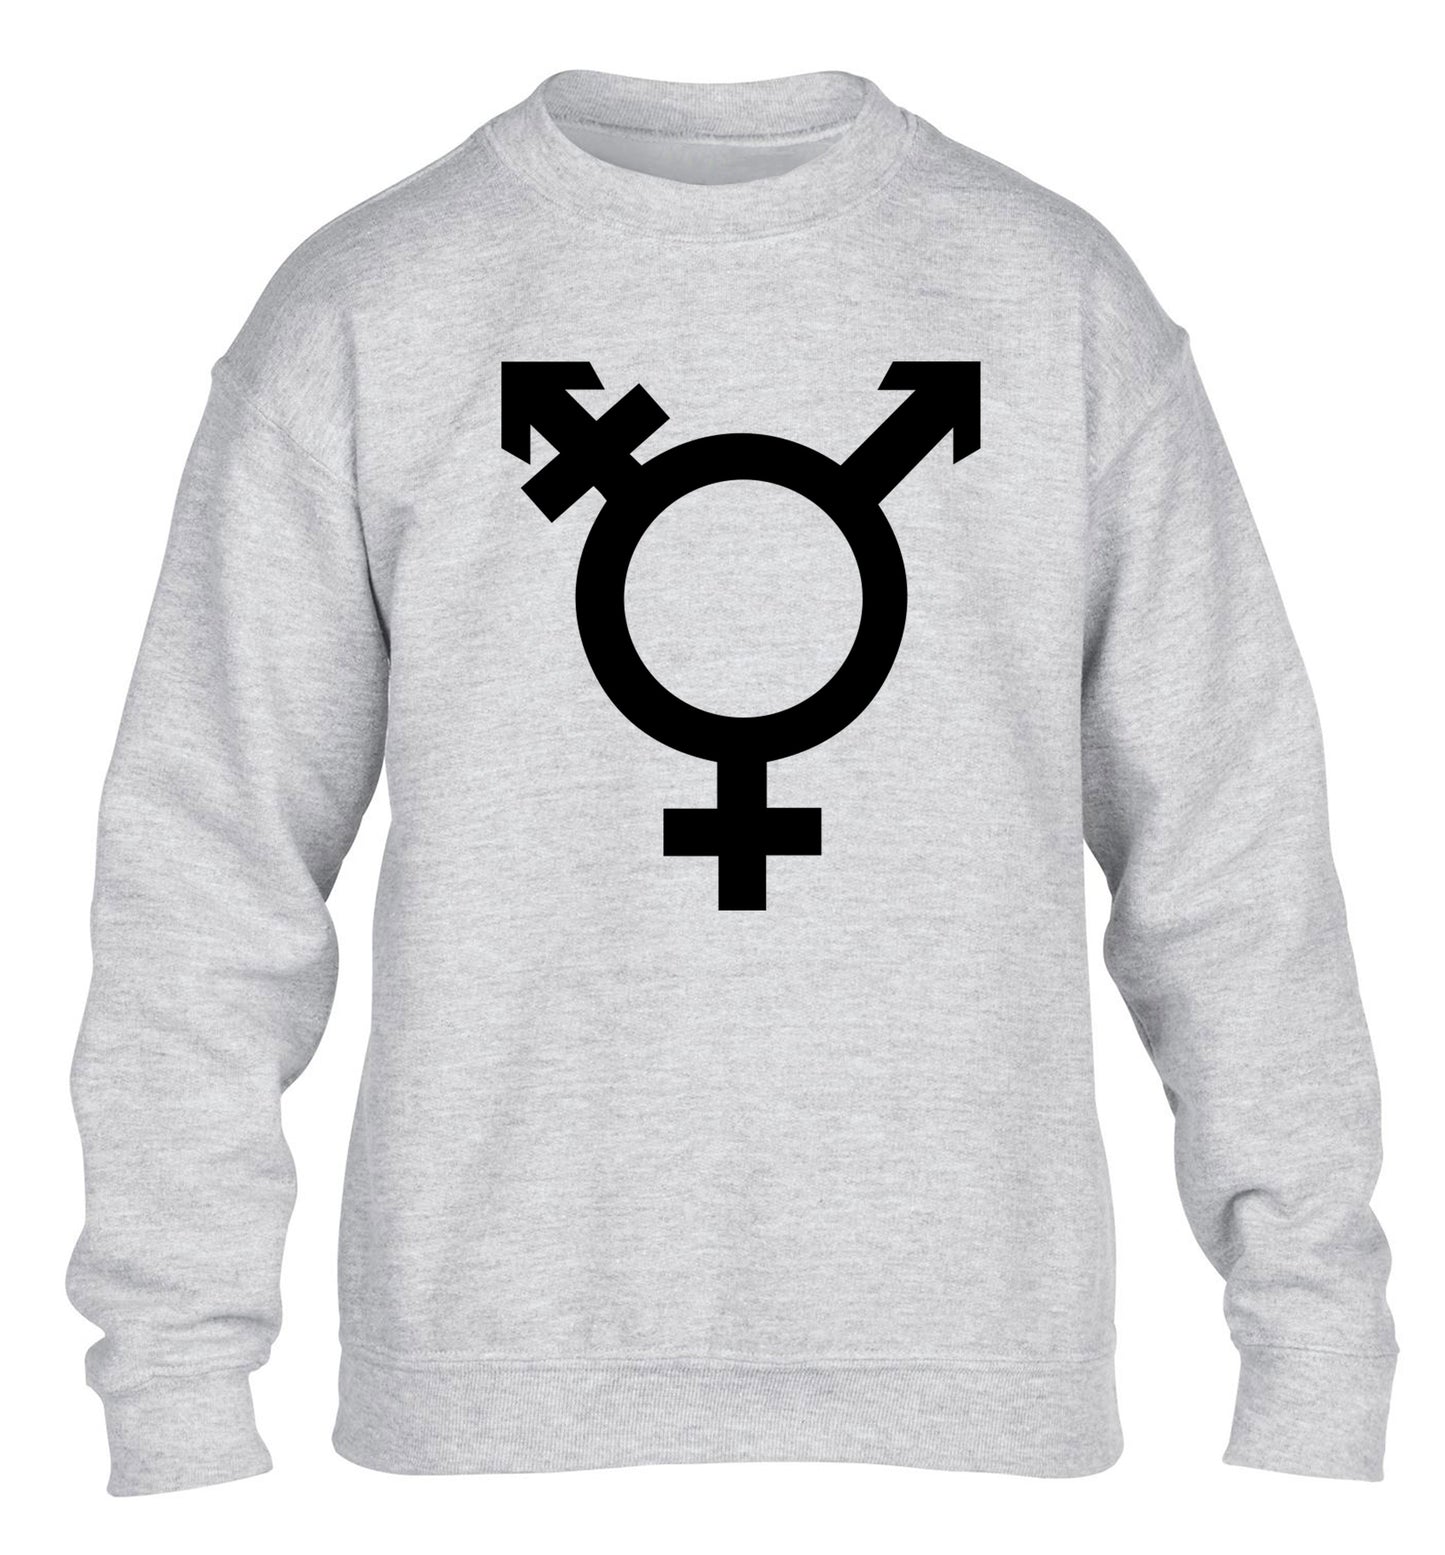 Gender neutral symbol large children's grey sweater 12-14 Years